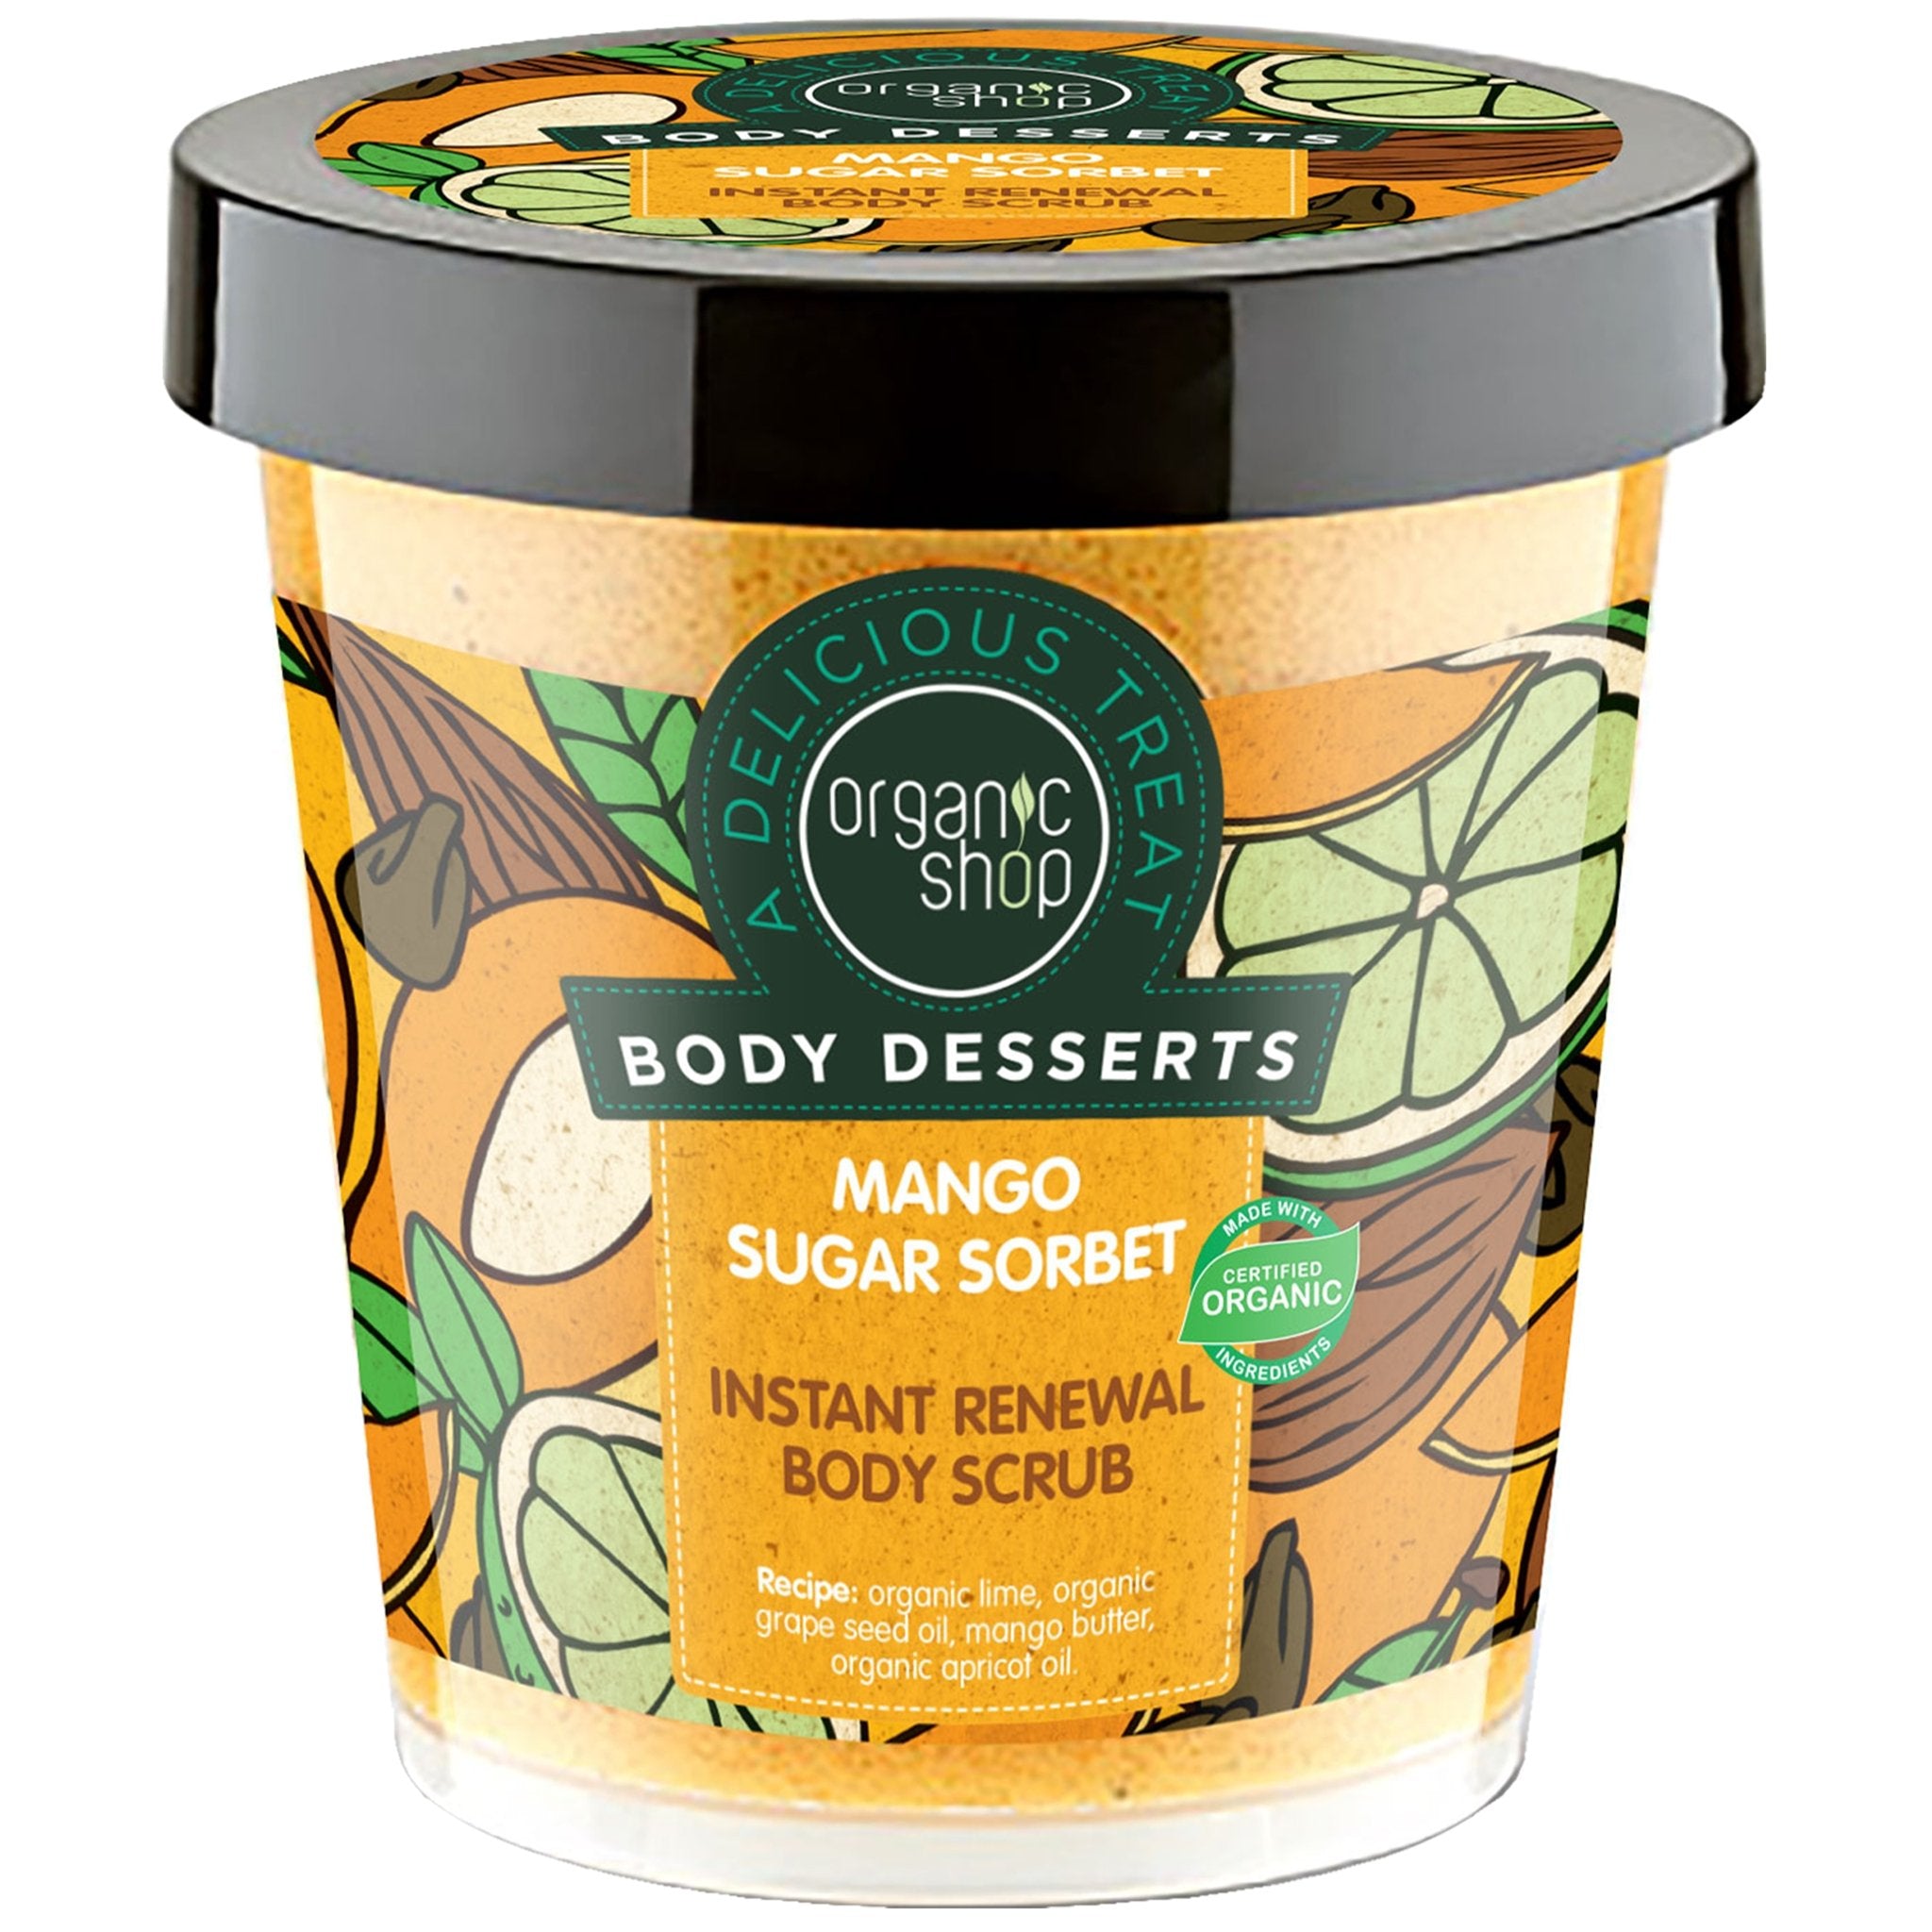 Body Desserts Mango Sugar Sorbet Instant Renewal Body Scrub - mypure.co.uk